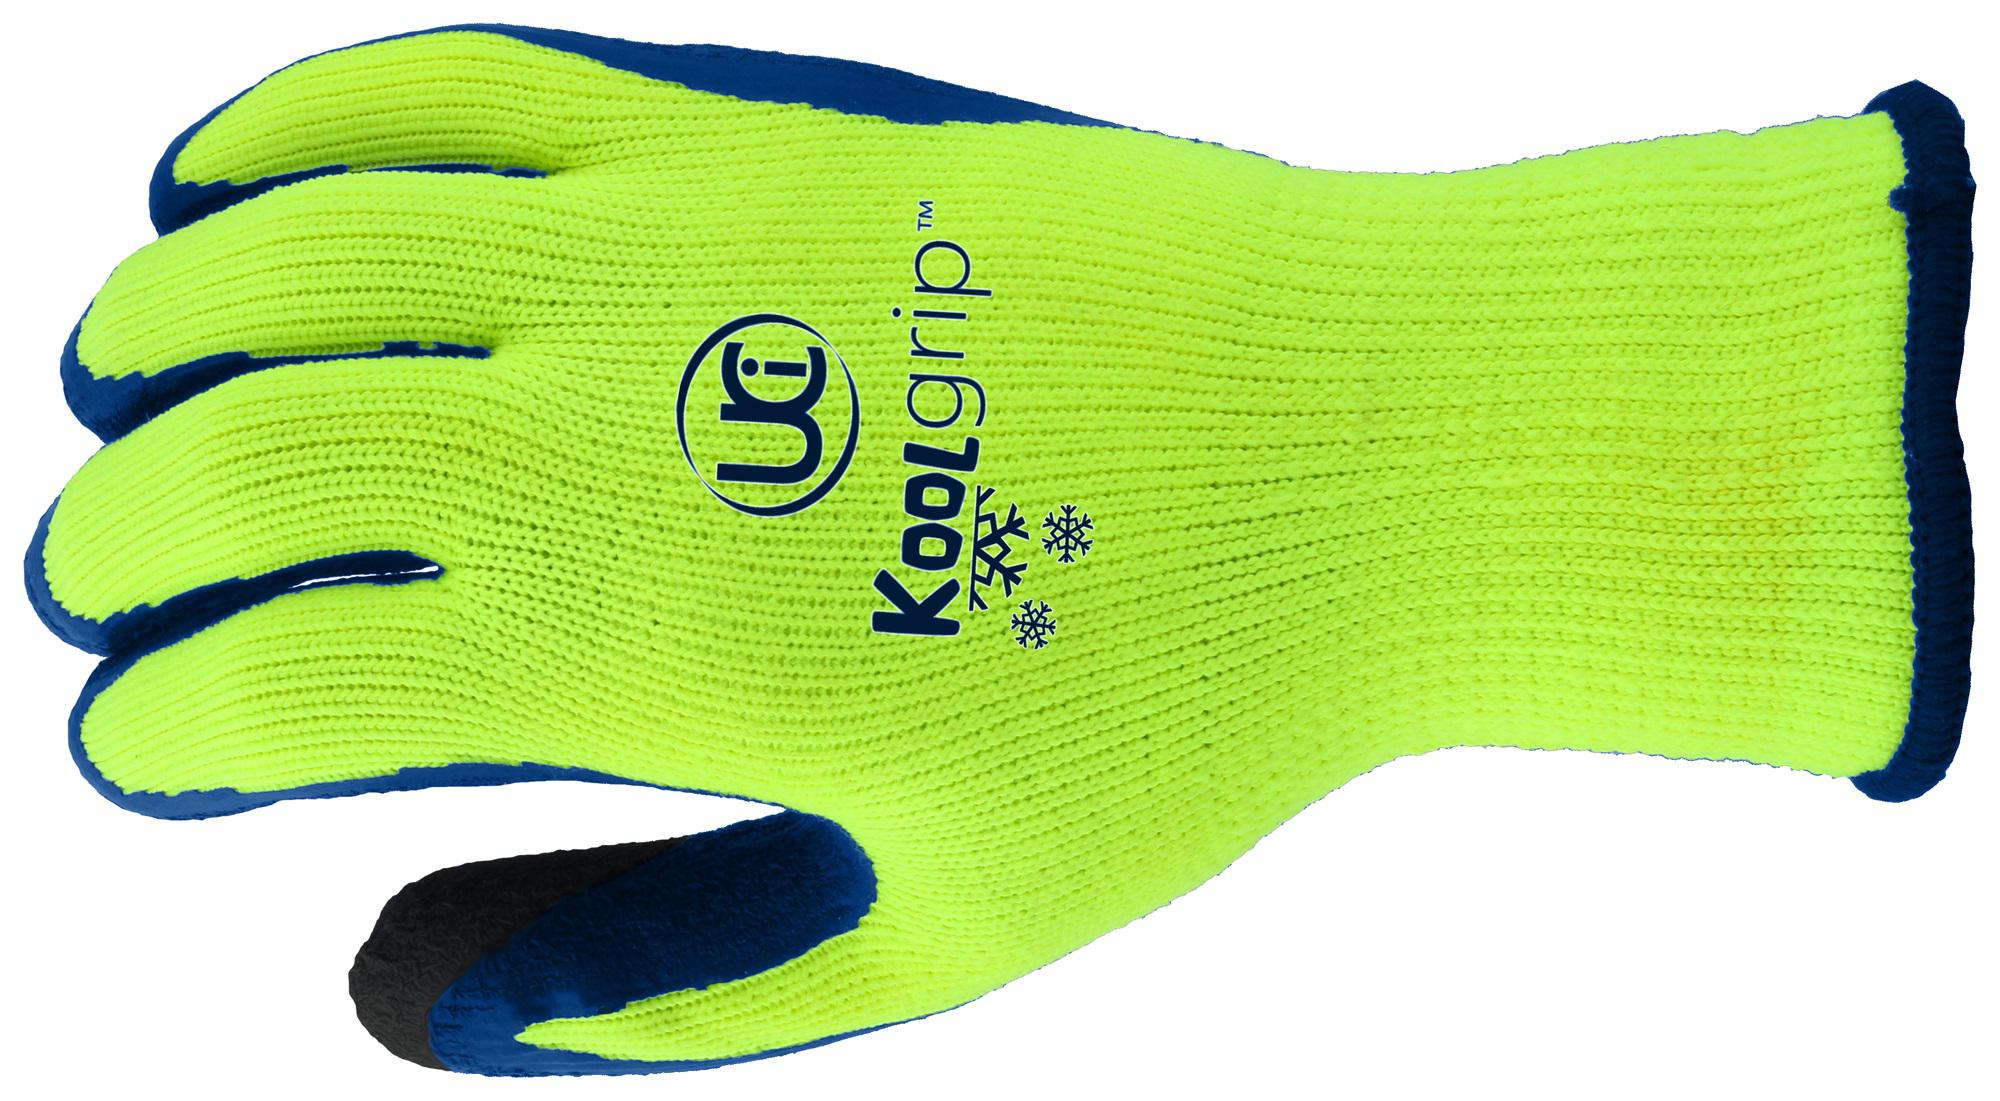 Uci G/koolgrip/ye/11 Thermal Latex Gloves, Pet, Blu/yel, Xxl